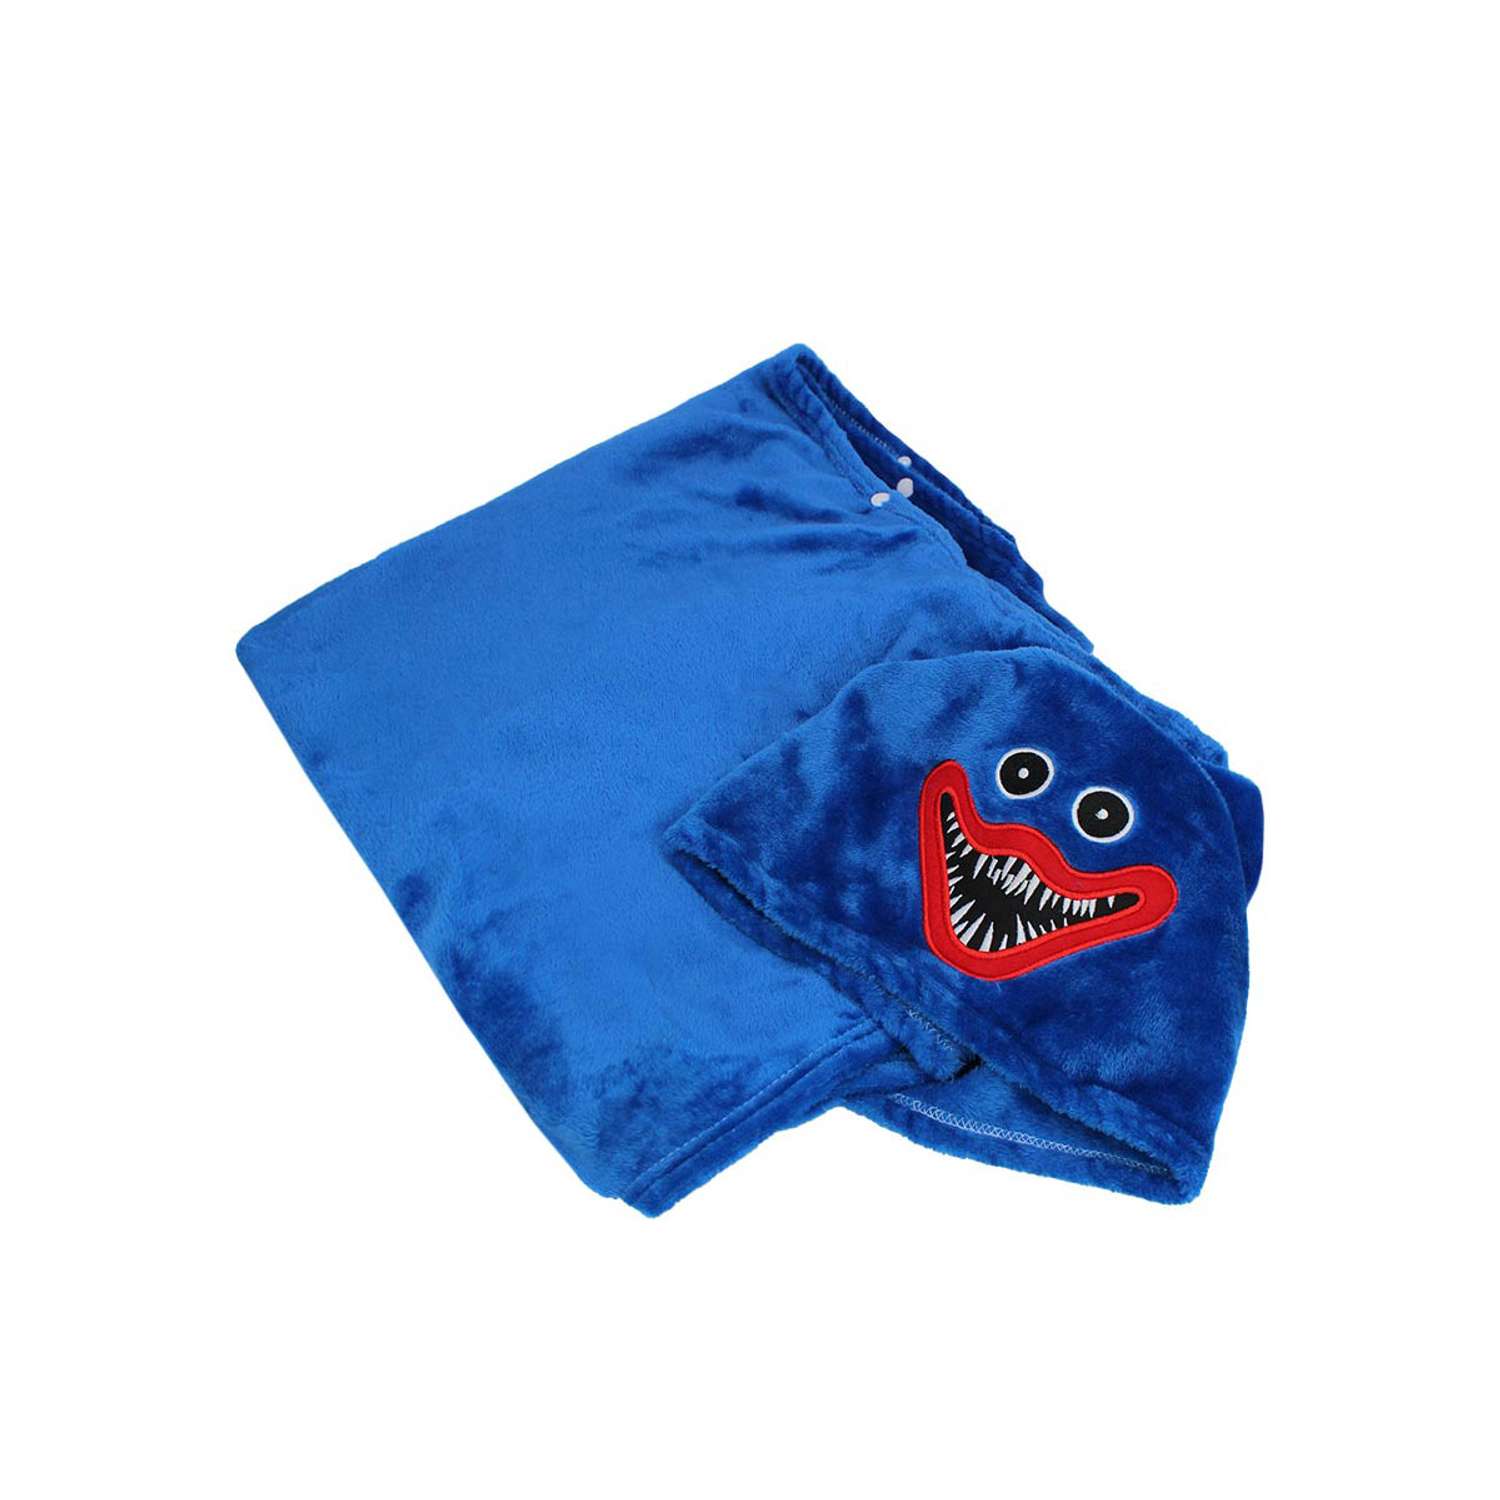 Плед детский Михи-Михи Хаги Ваги с капюшоном Хагги Вагги синий 150х70 см - фото 3